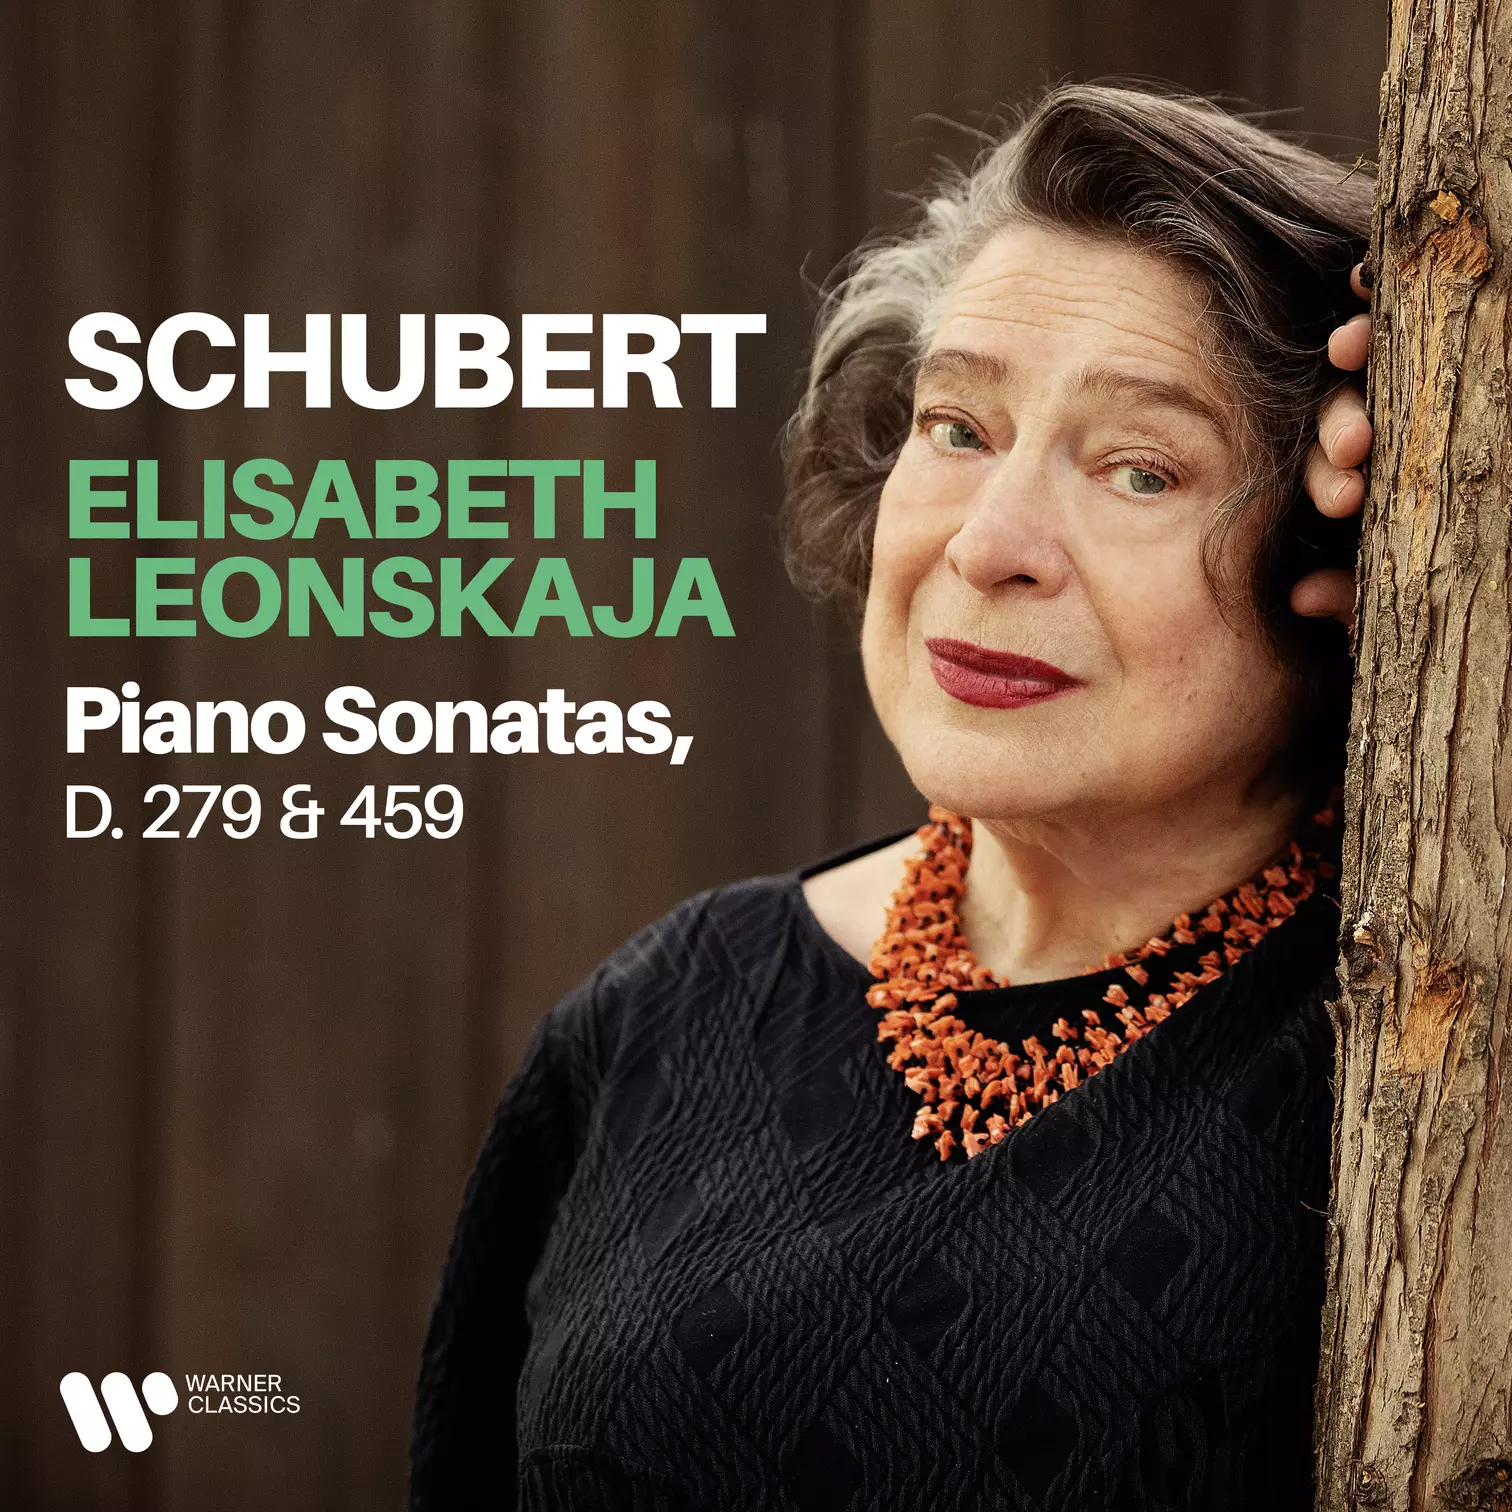 Schubert: Piano Sonatas, D. 279 & 459